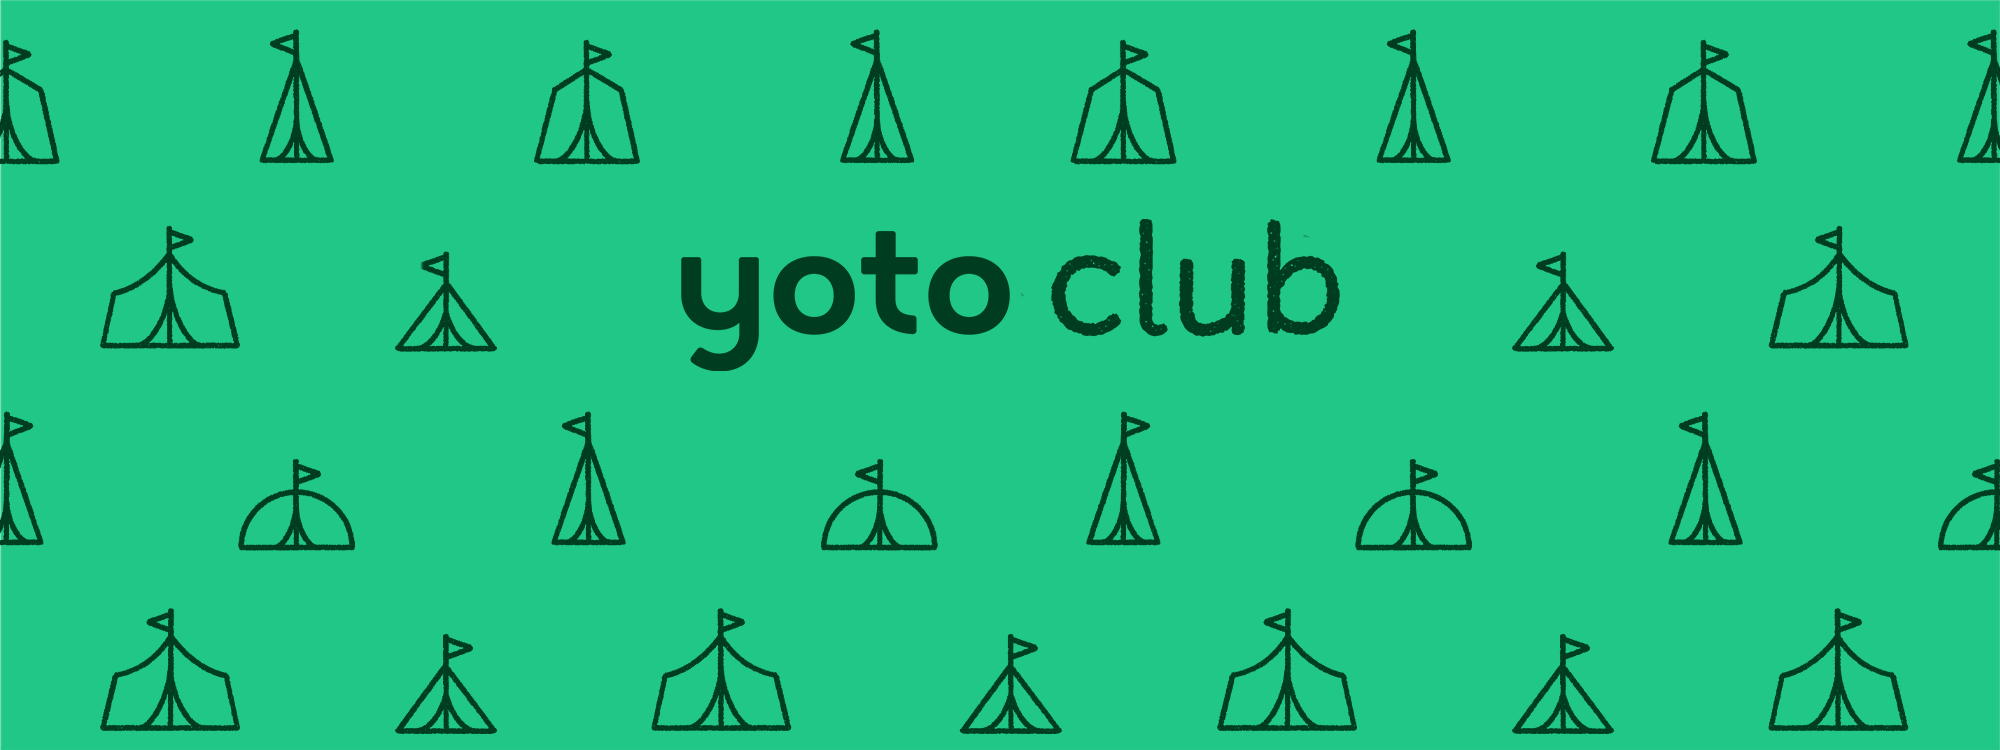 Welcome to Yoto Club!